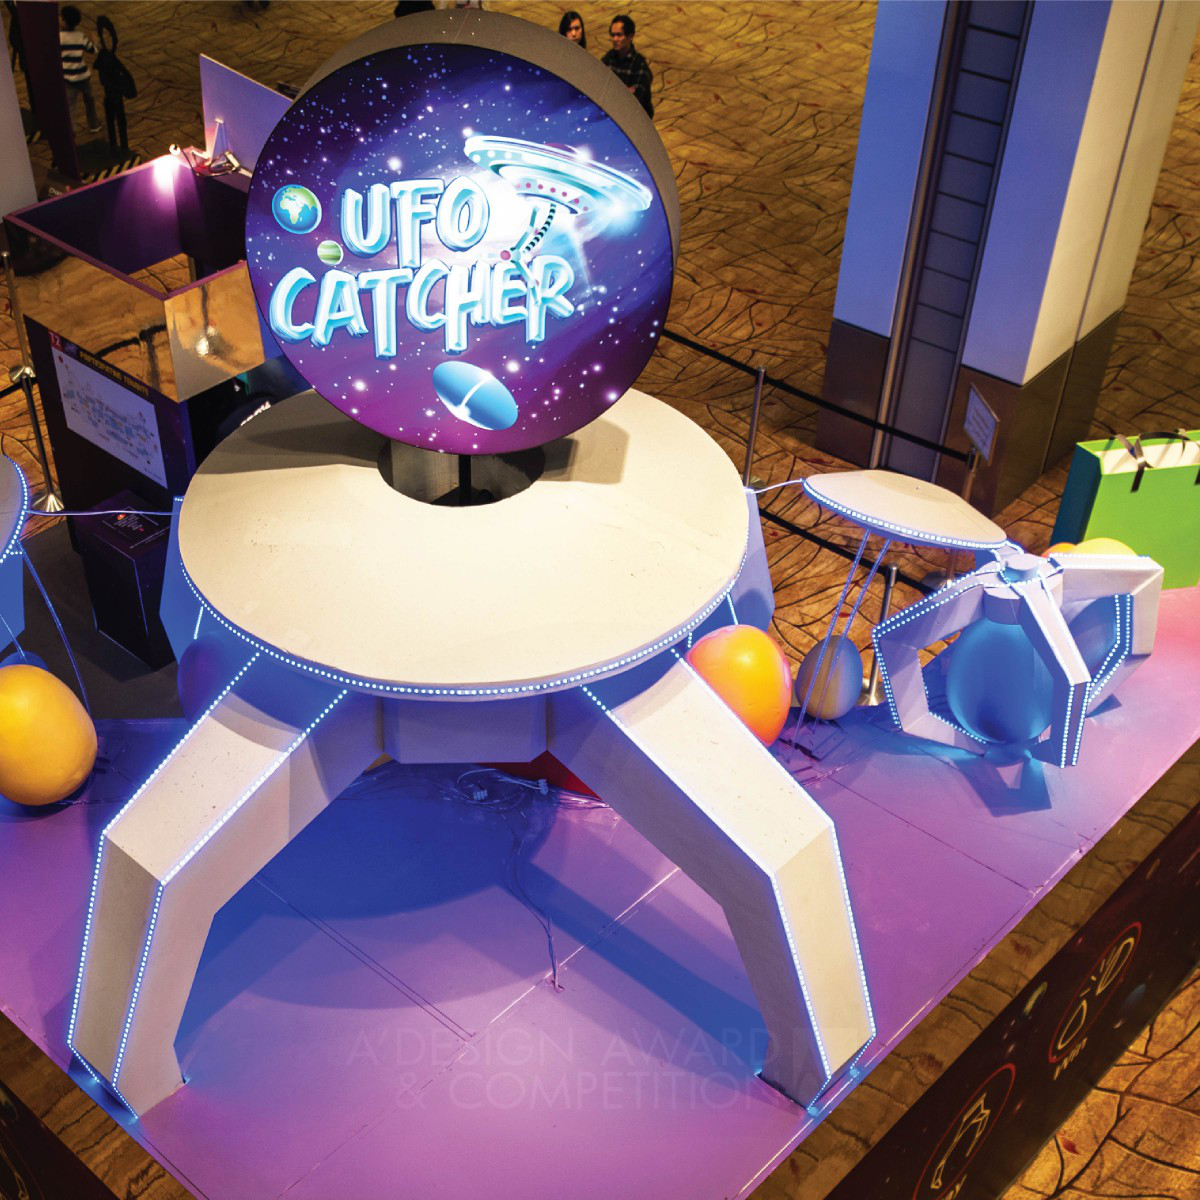 UFO Catcher Event design by Visual Studio Singapore Pte Ltd